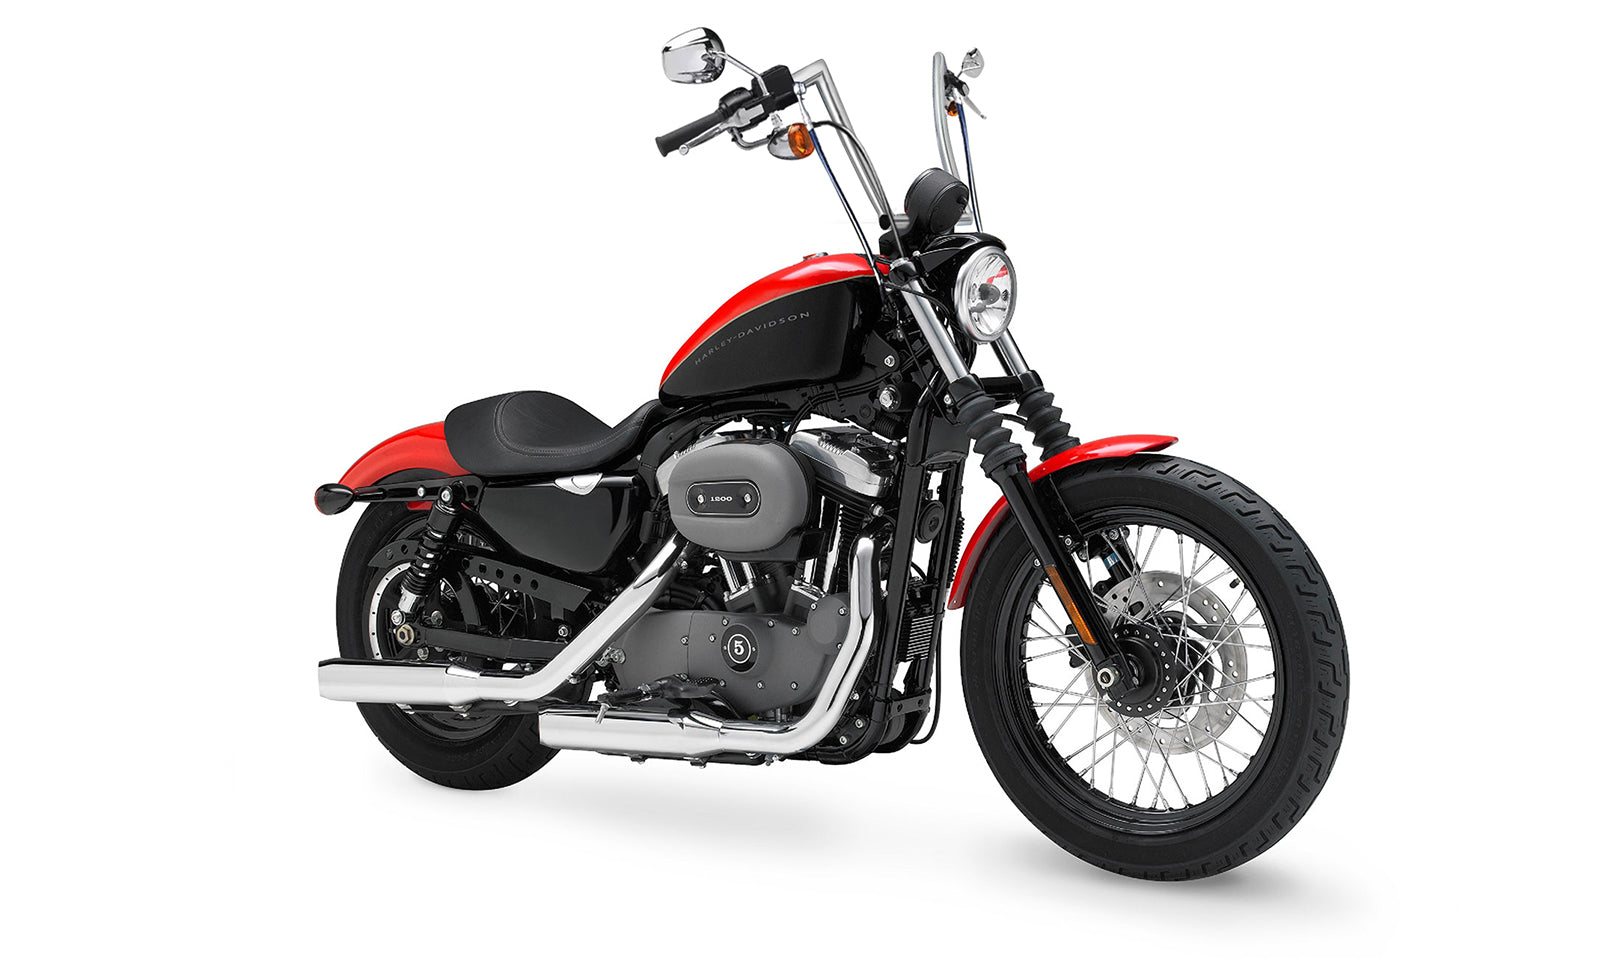 Viking Iron Born 9" Handlebar for Harley Sportster 1200 Nightster XL1200N Chrome Bag on Bike View @expand